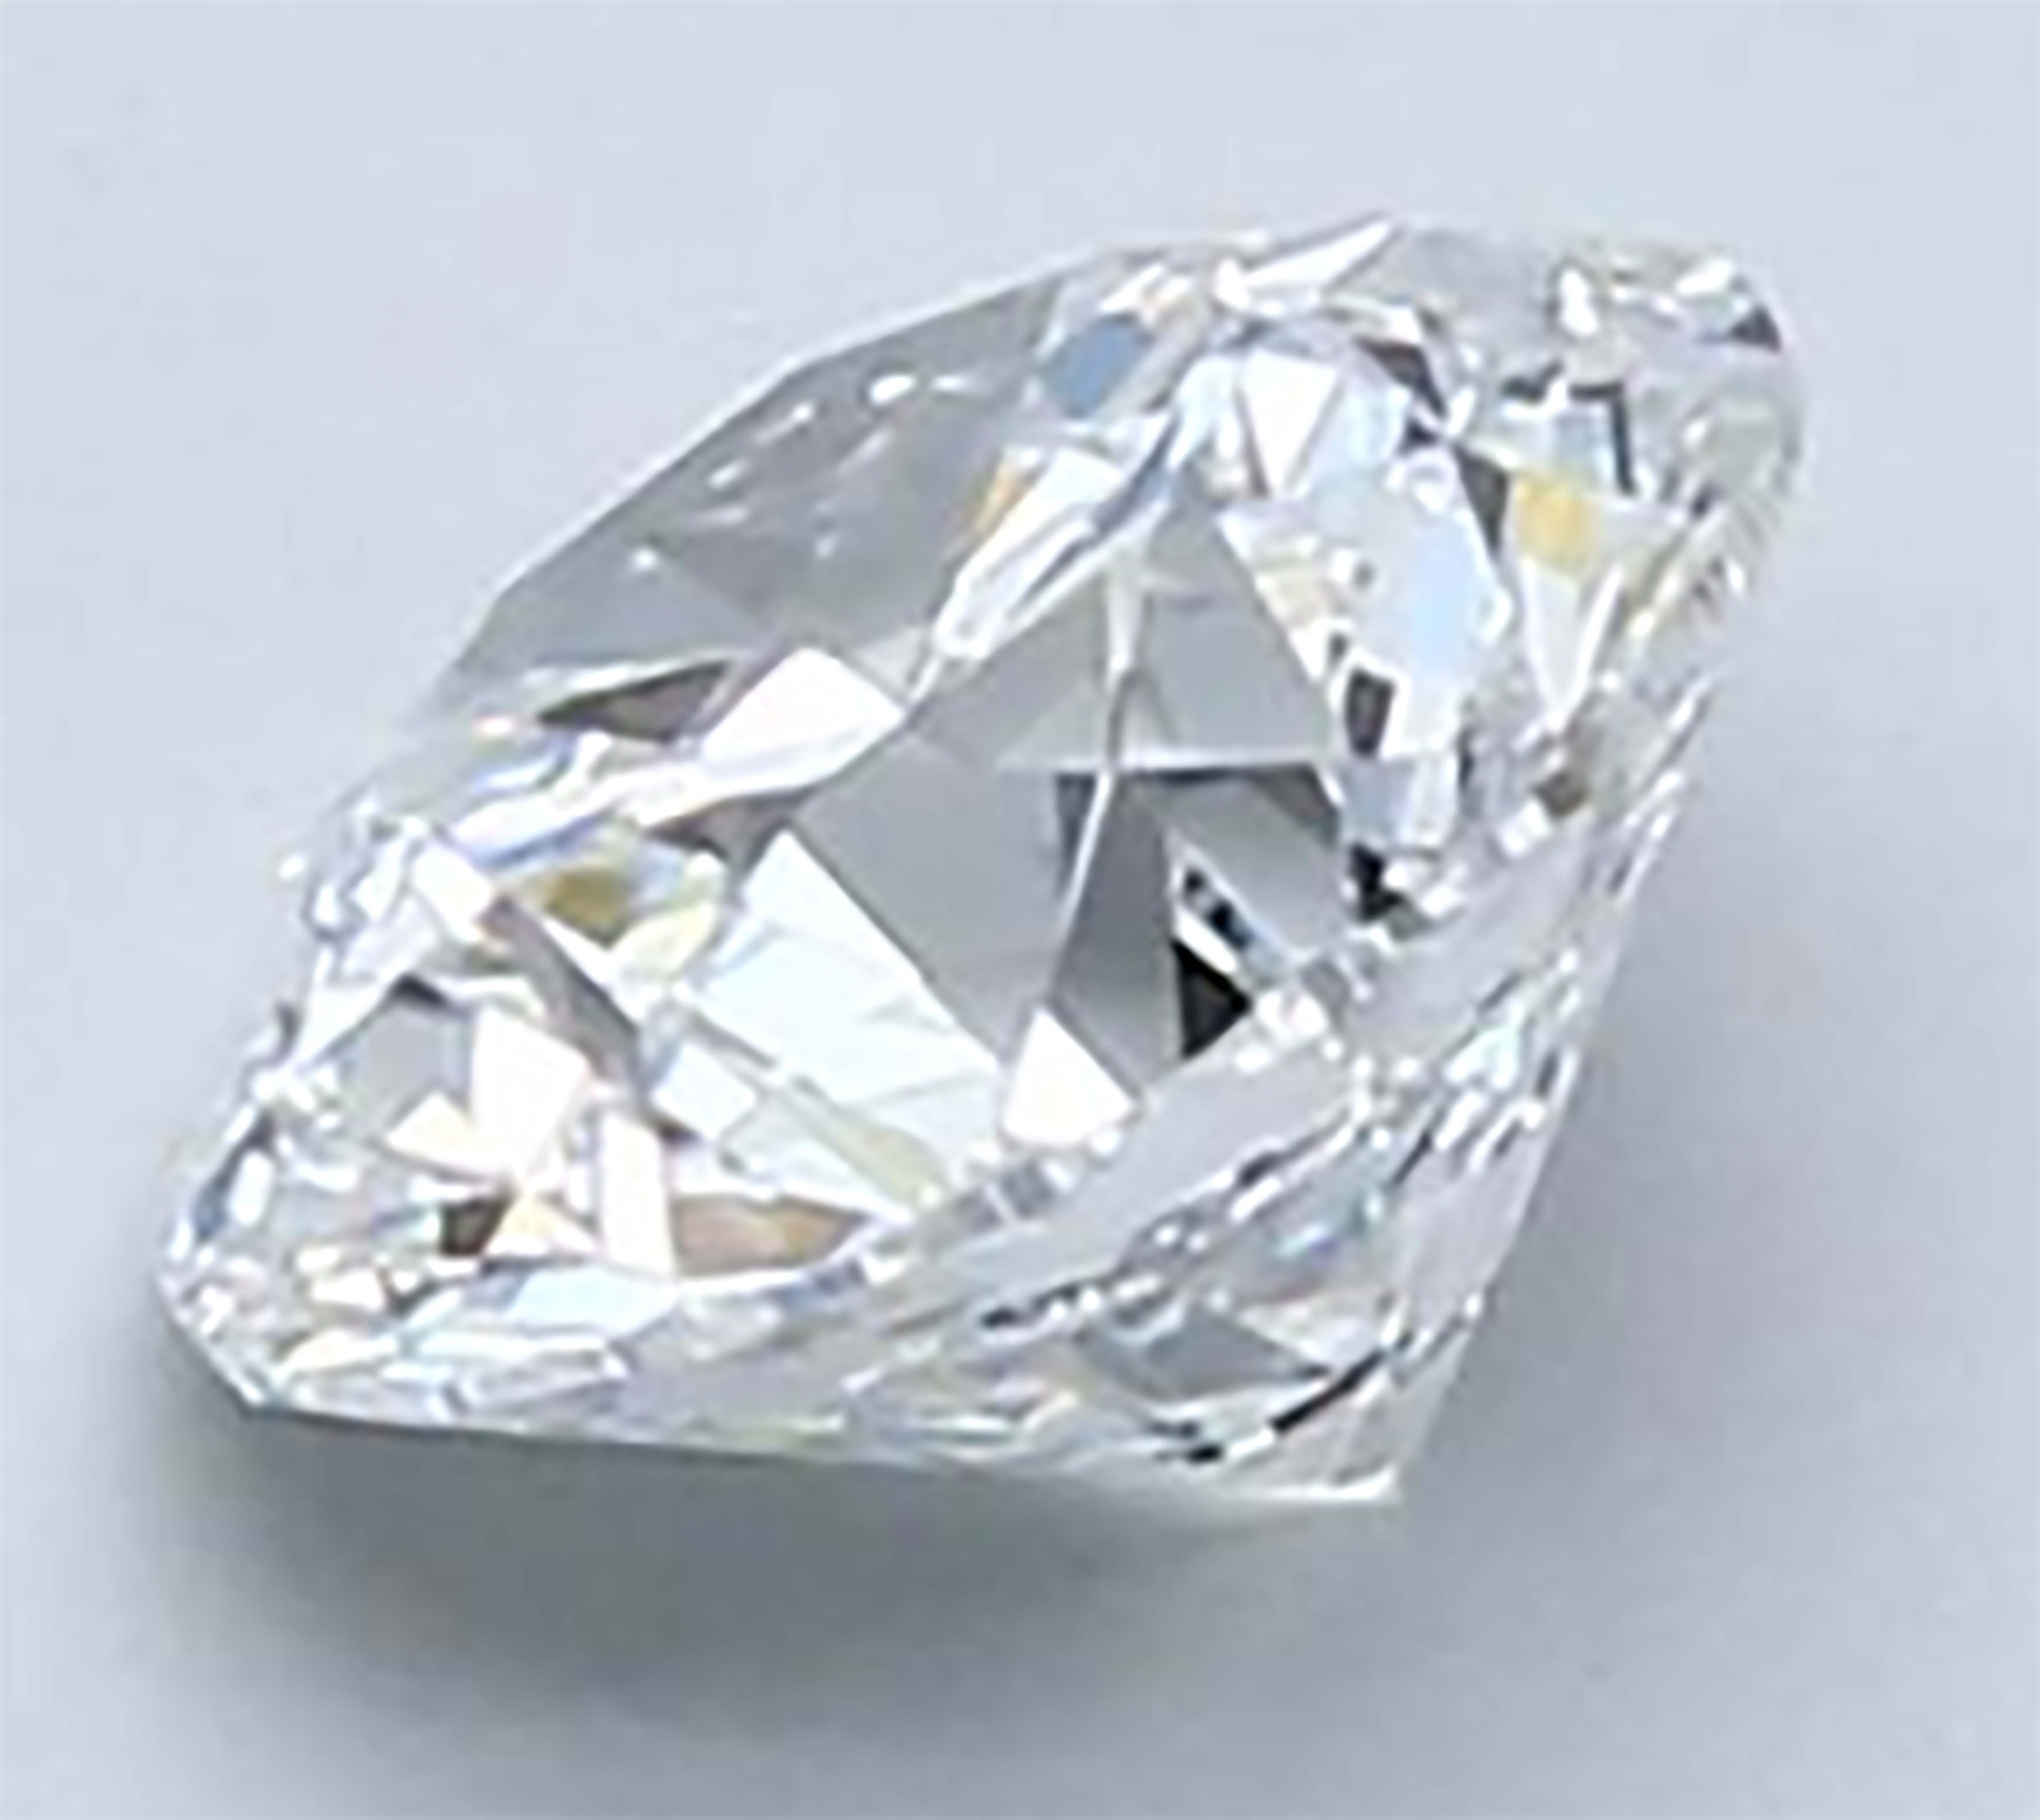 0.71 Carat, GIA Certified, Natural IF Diamond - Image 2 of 5